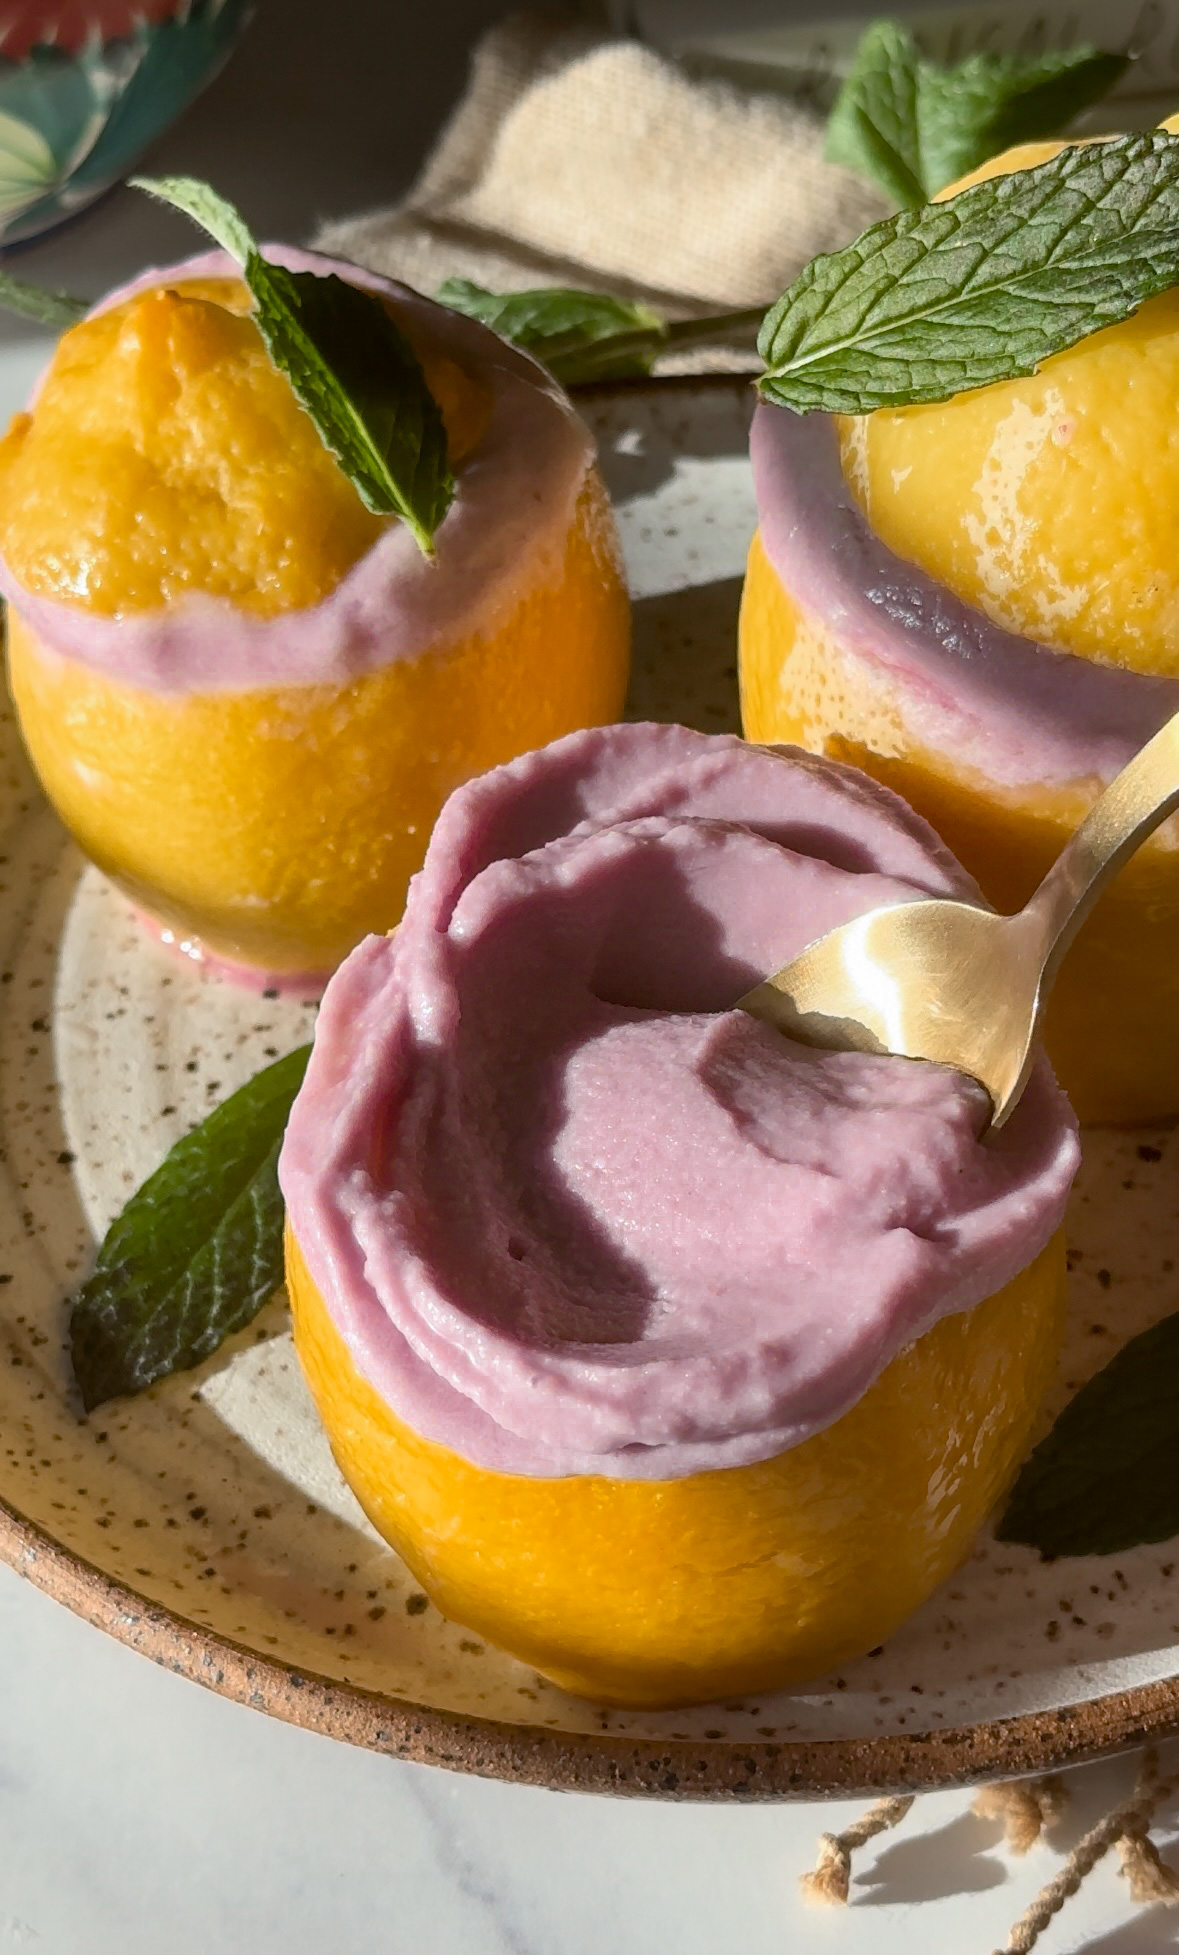 vegan lemon lavender ice cream (healthy and dairy free) served in lemon rind cups